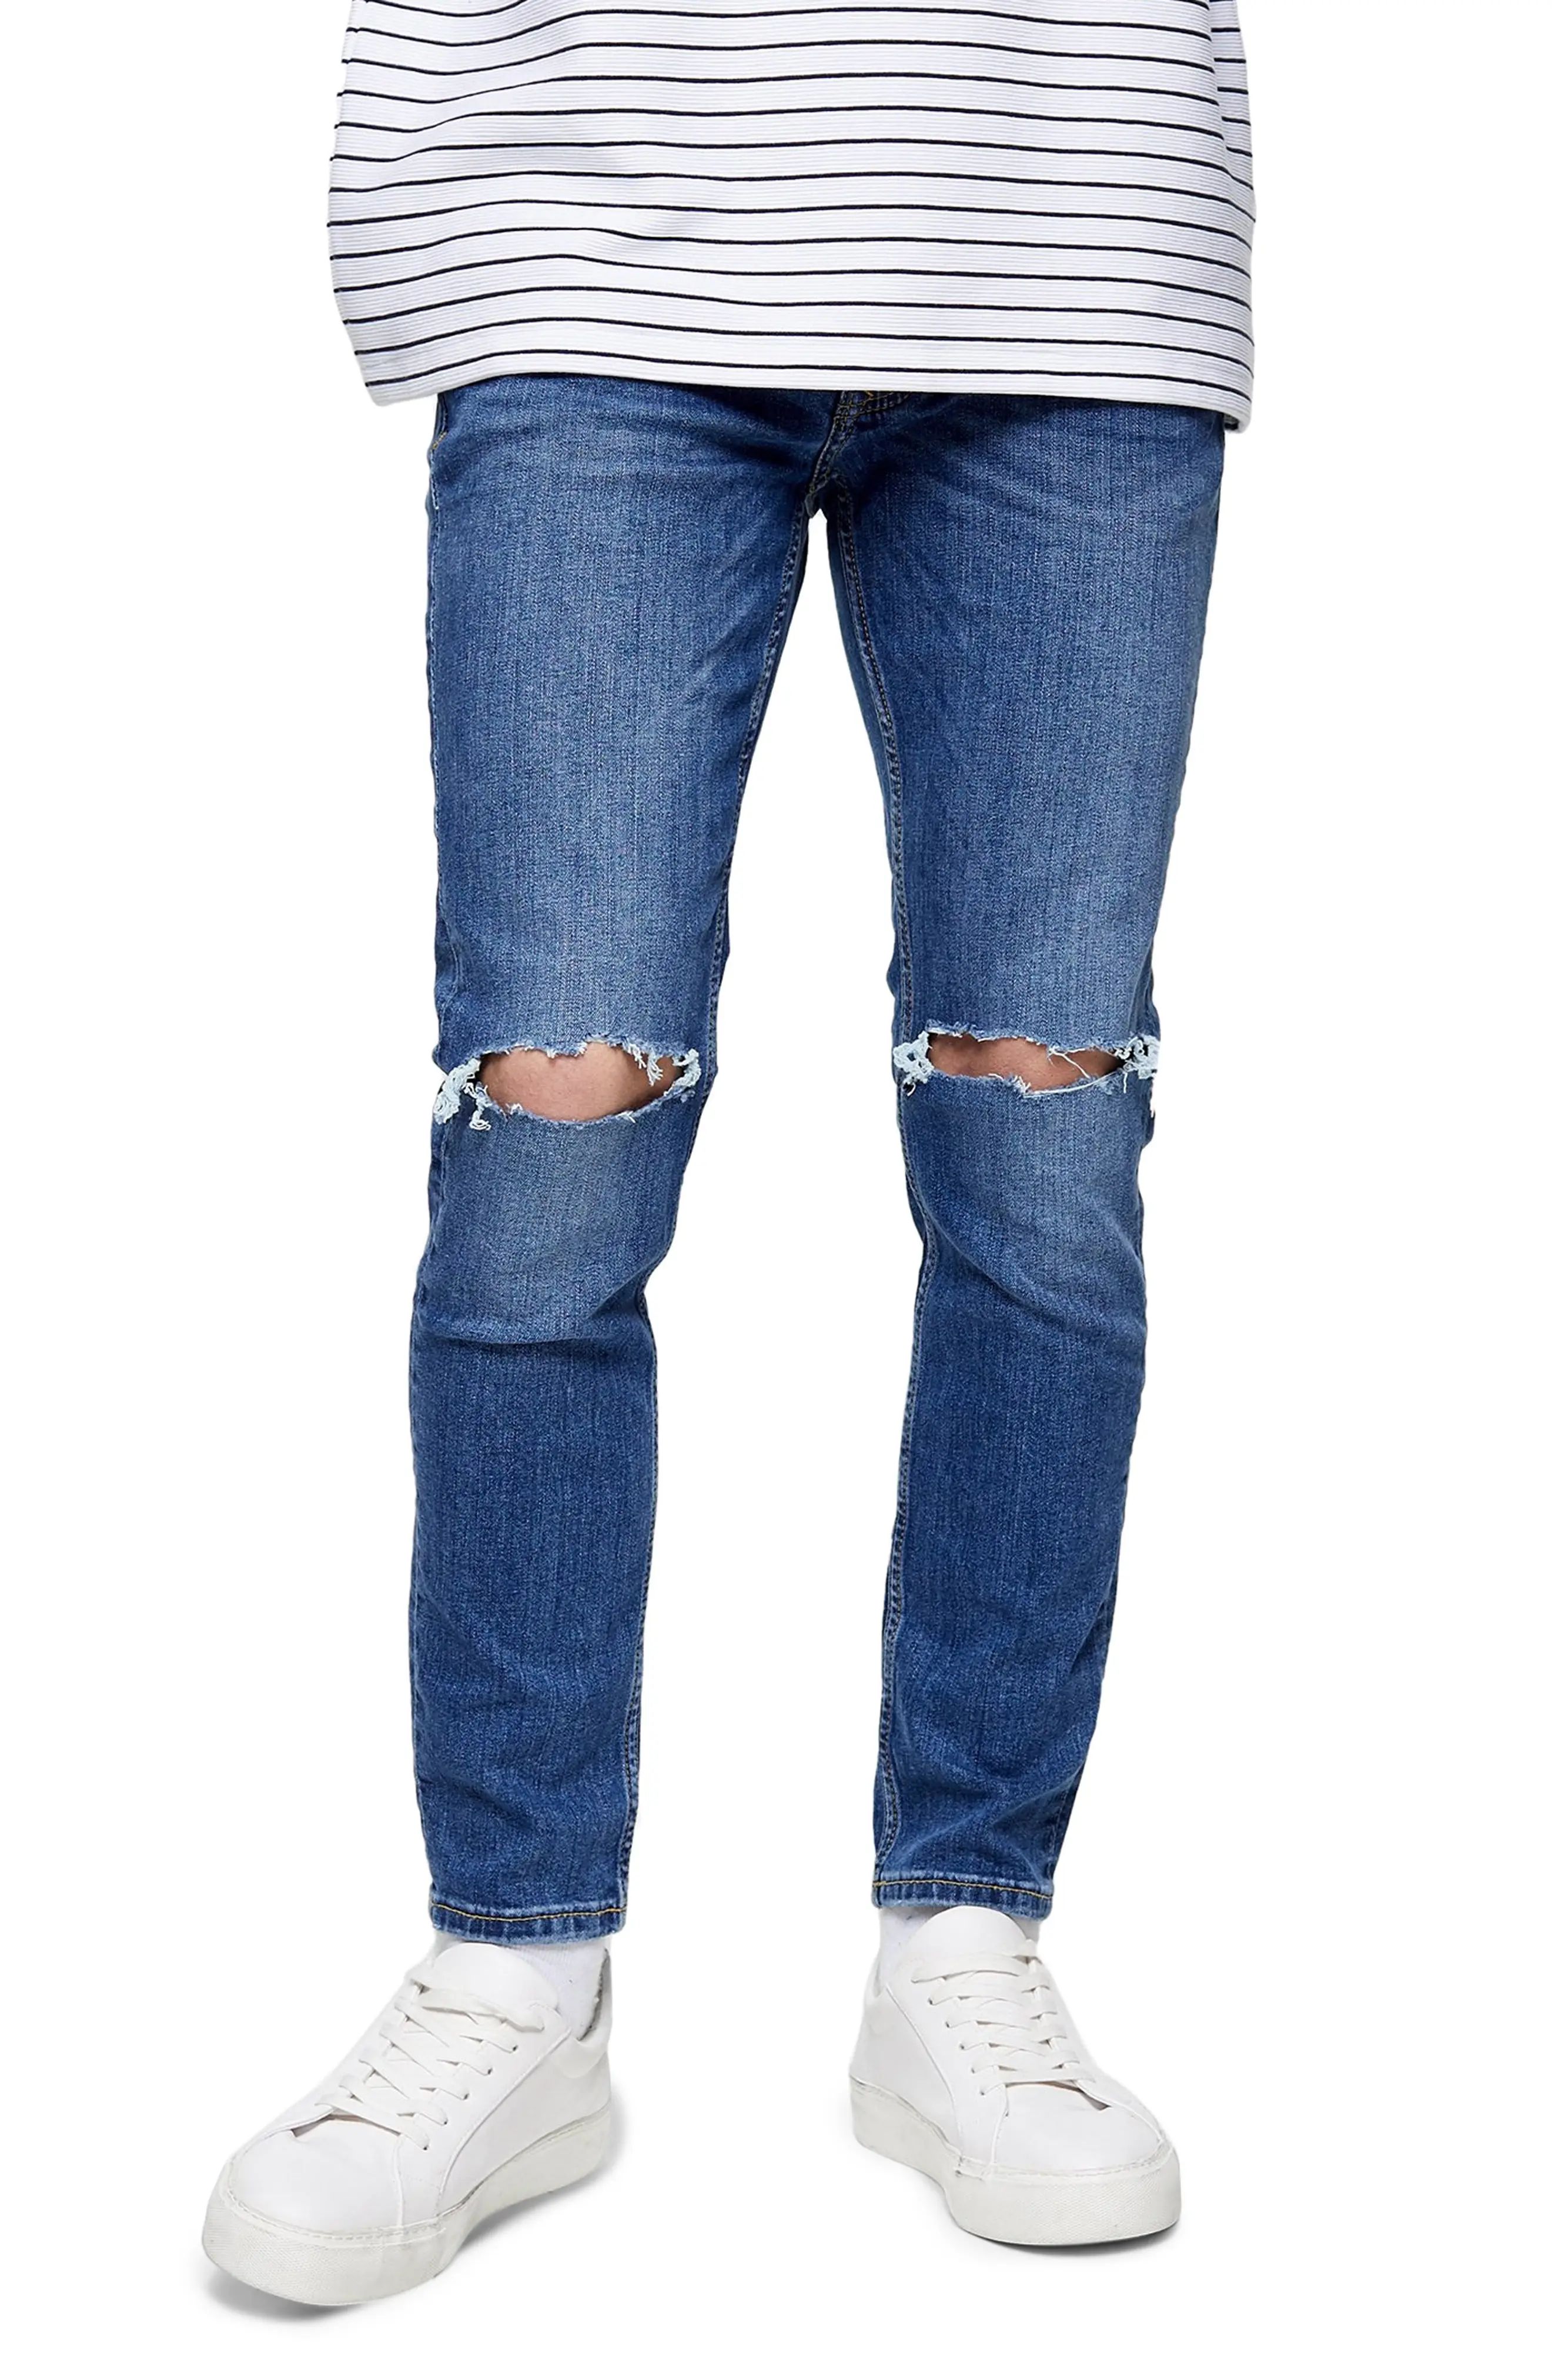 Men's Topman Ripped Skinny Jeans, Size 36 x 34 - Blue | Nordstrom